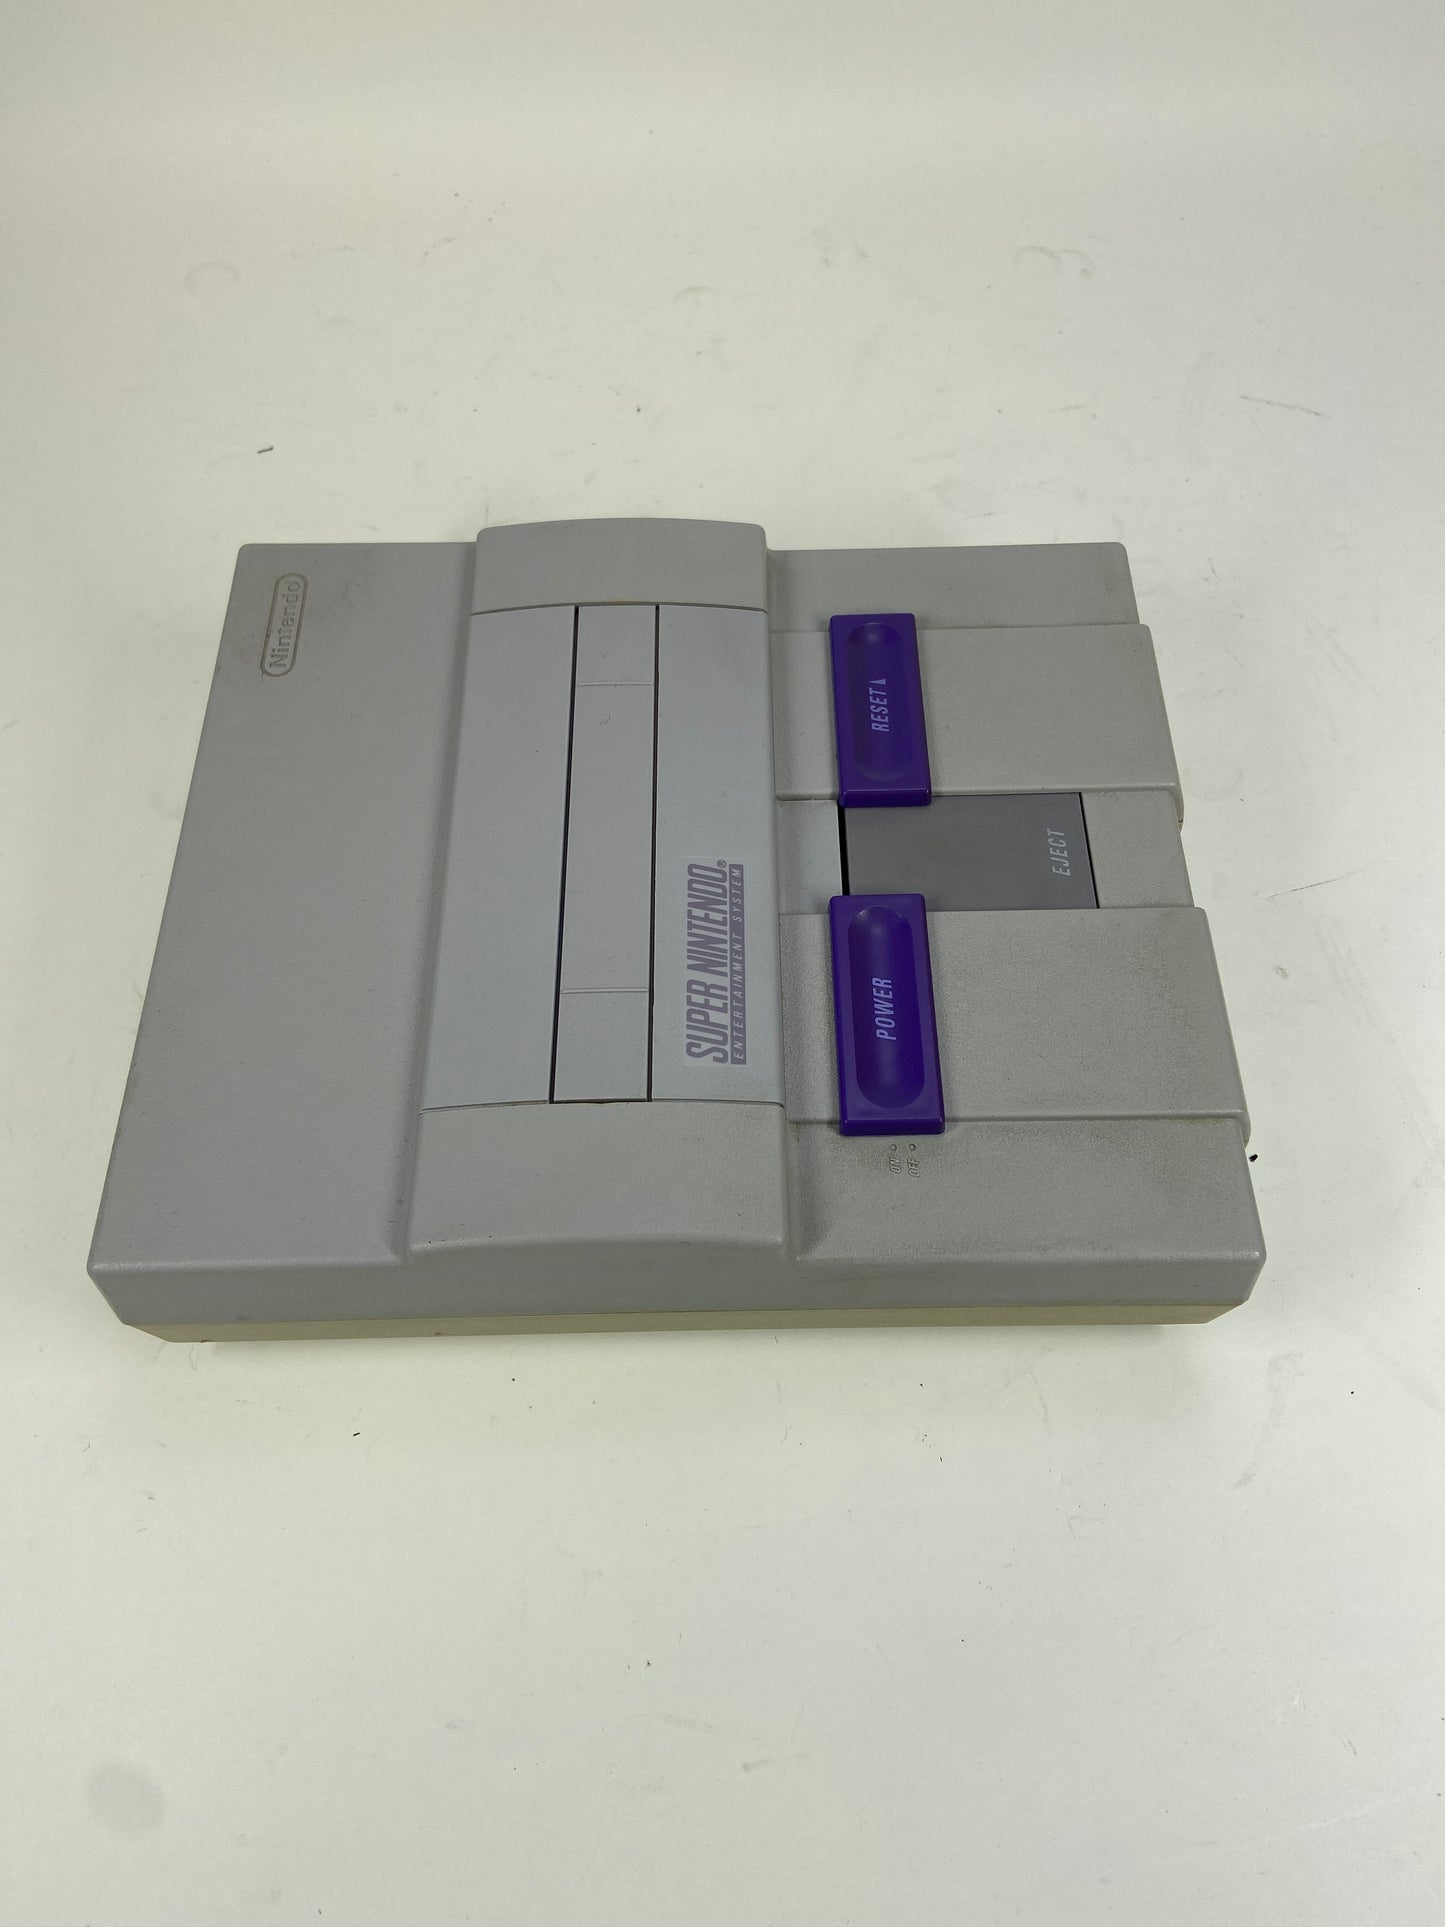 Super Nintendo Super Nintendo Entertainment System SNES Video Game Console